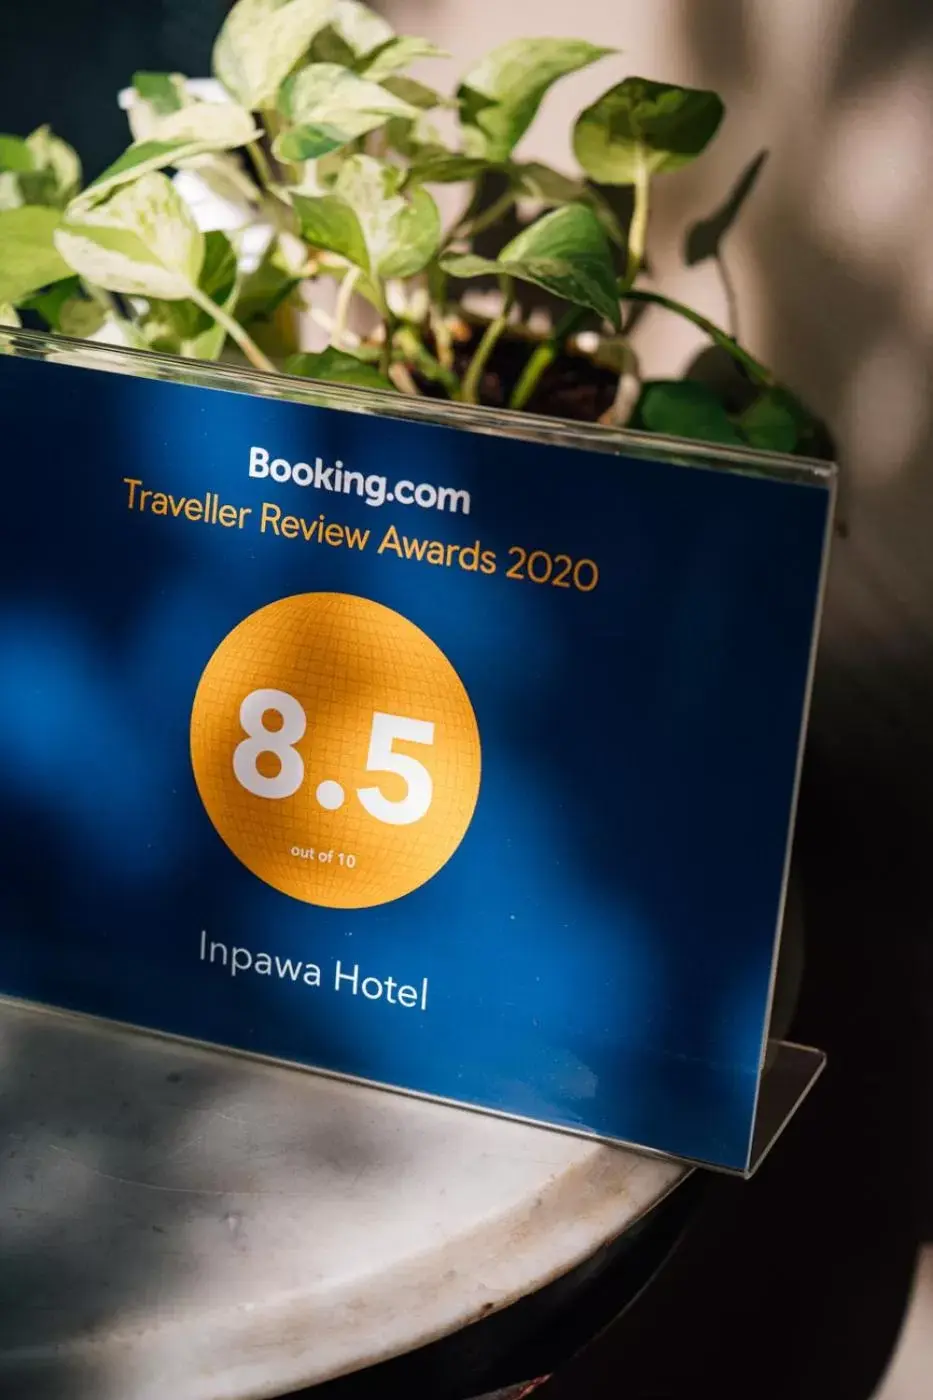 Certificate/Award in Inpawa Hotel